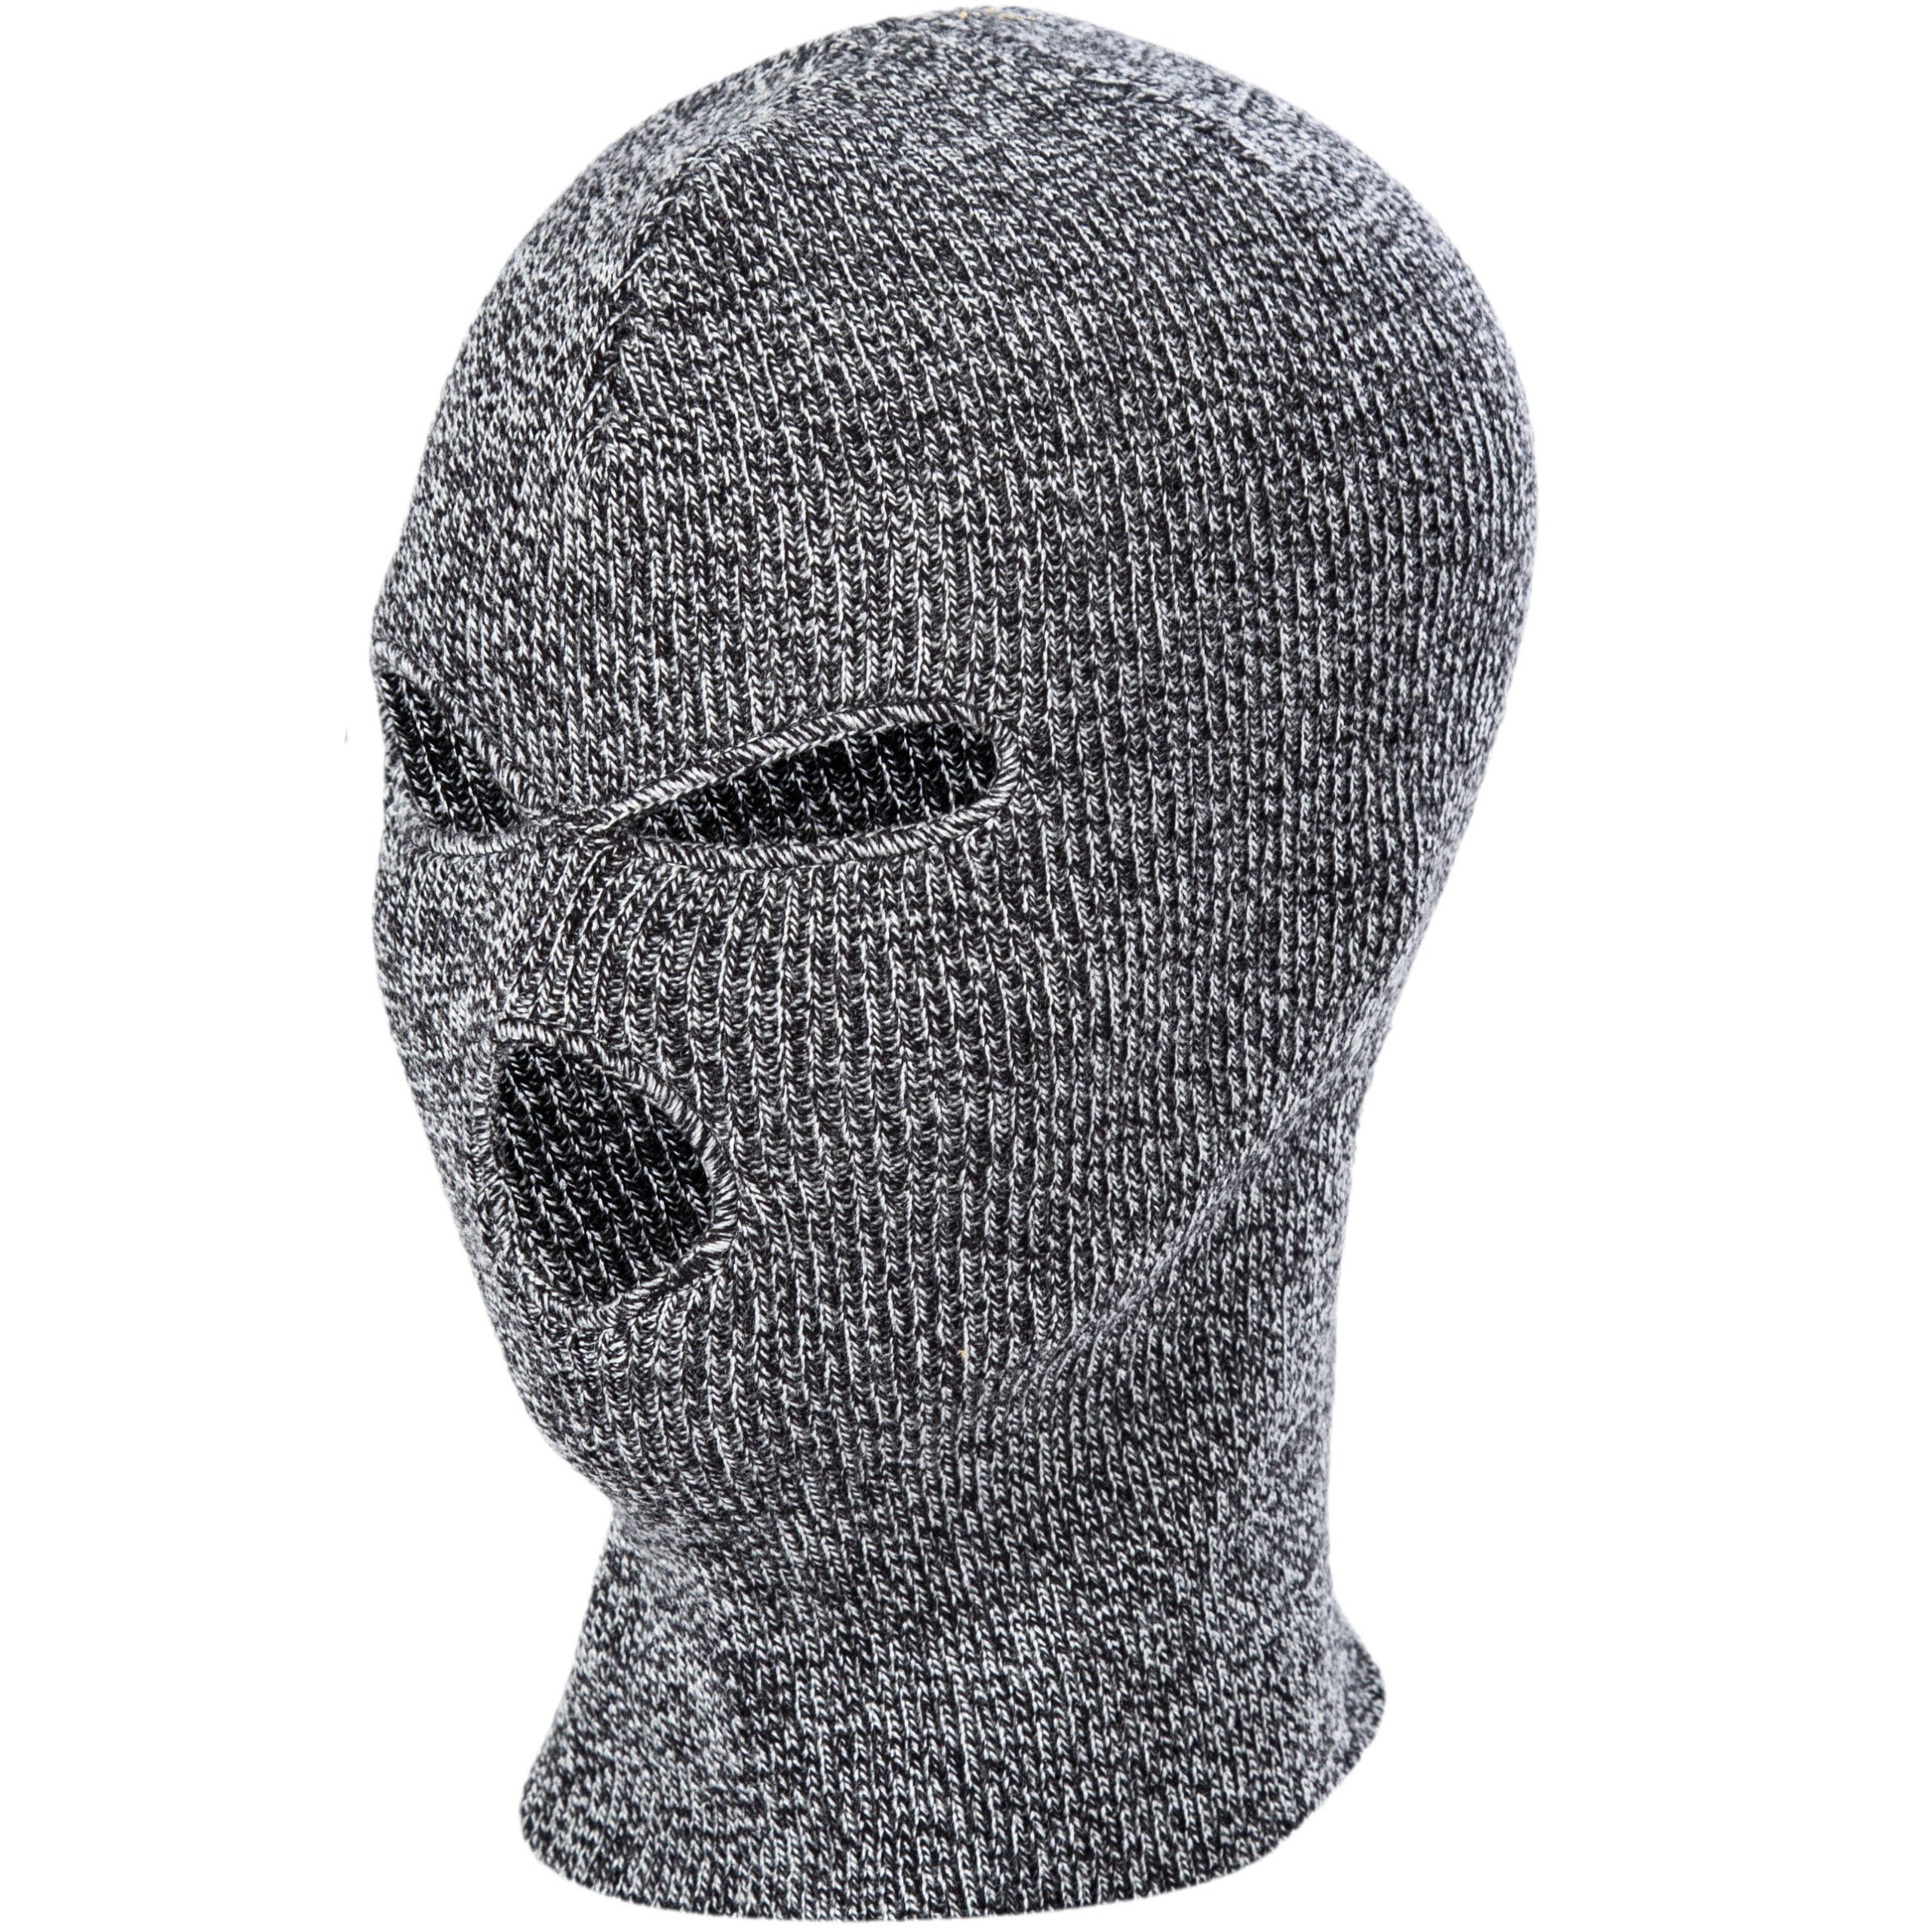 Zebra USA Made Supestretch Full Face Ski Mask - Single Piece